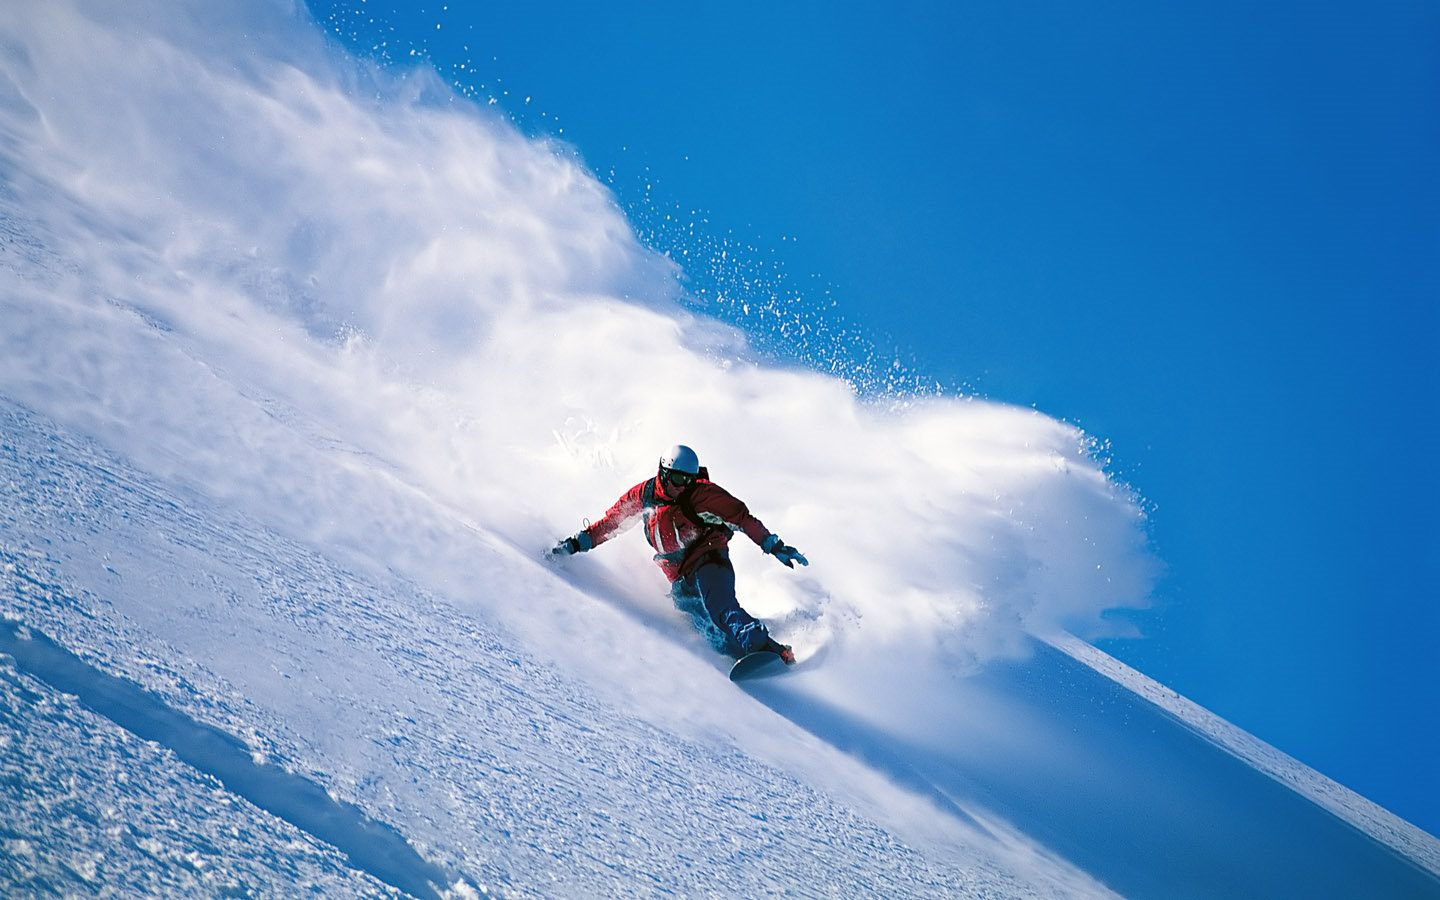 Snowboarding Wallpaper X